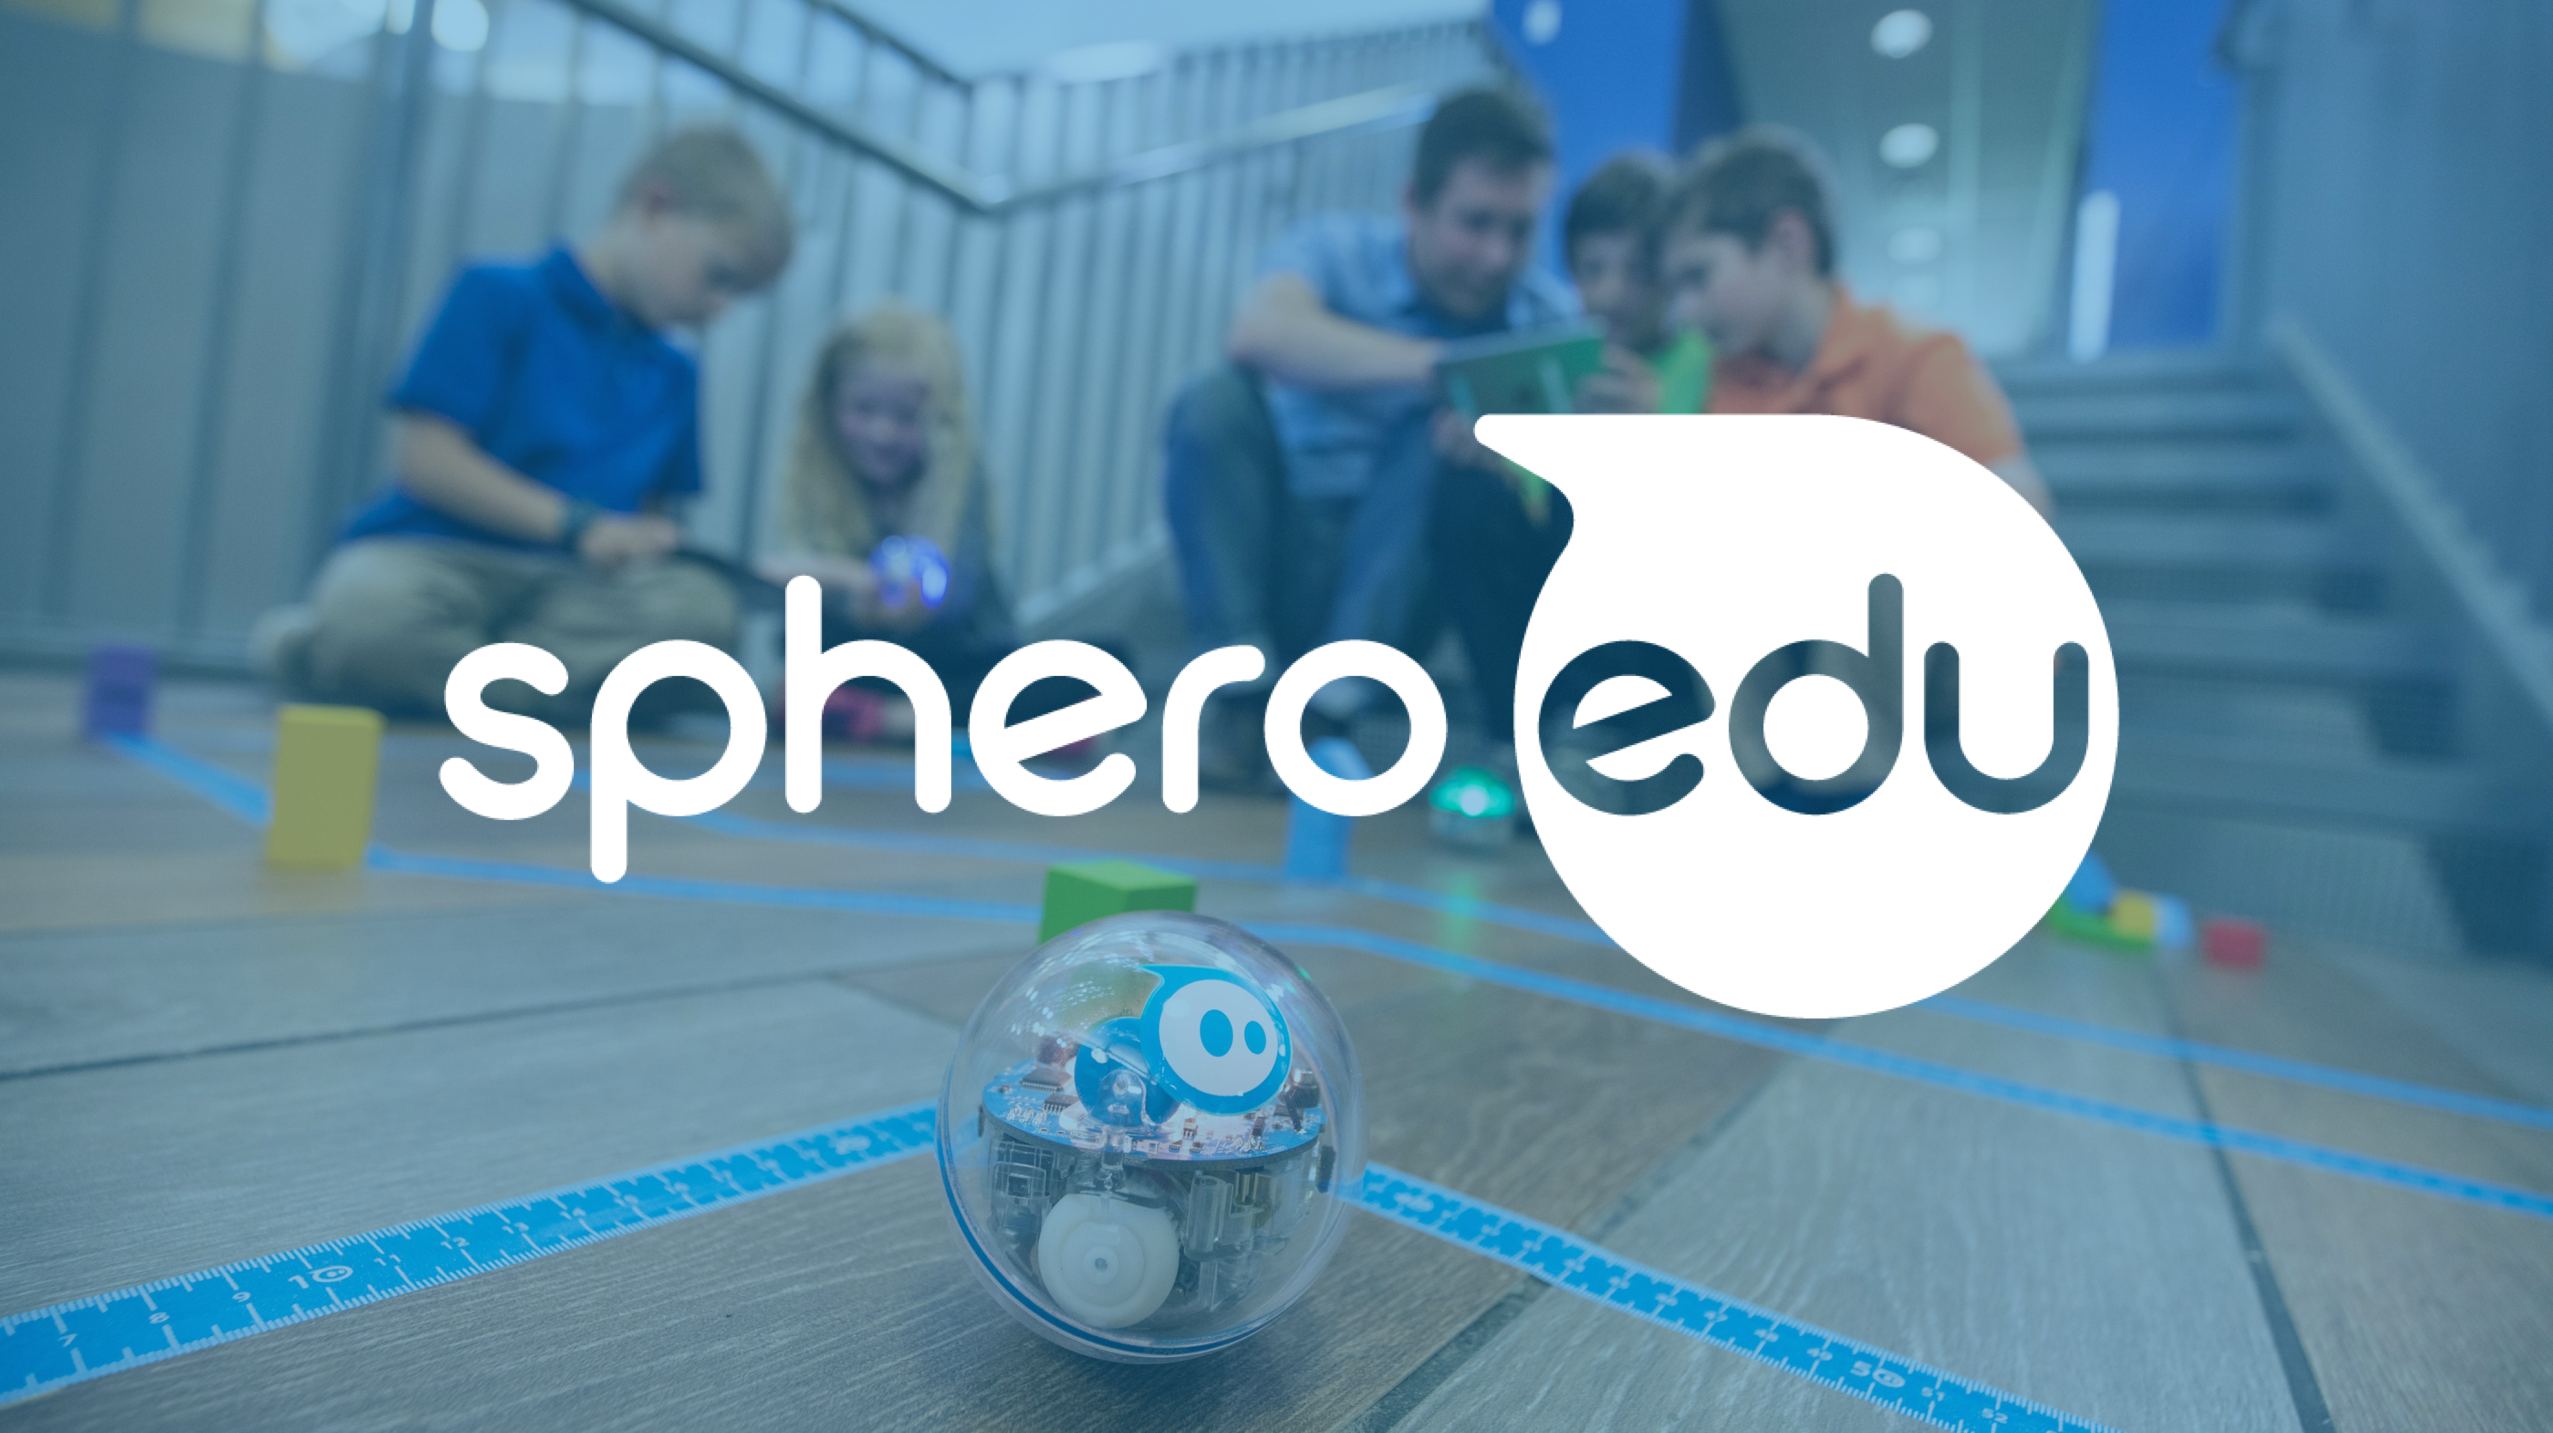 sphero edu.com